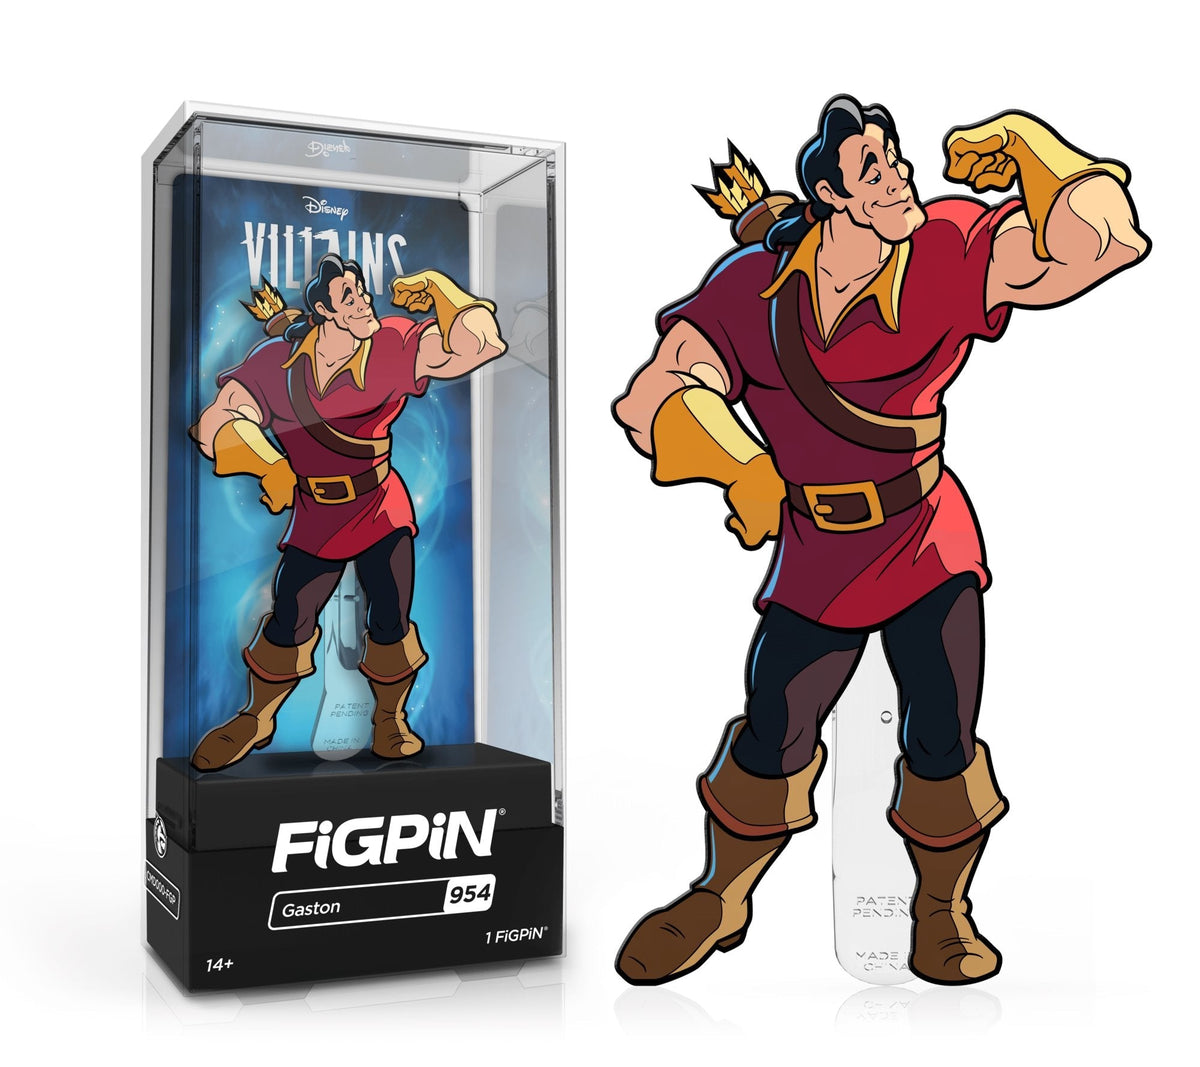 FiGPiN Classic DISNEY VILLAINS Gaston (954) 1st Edition